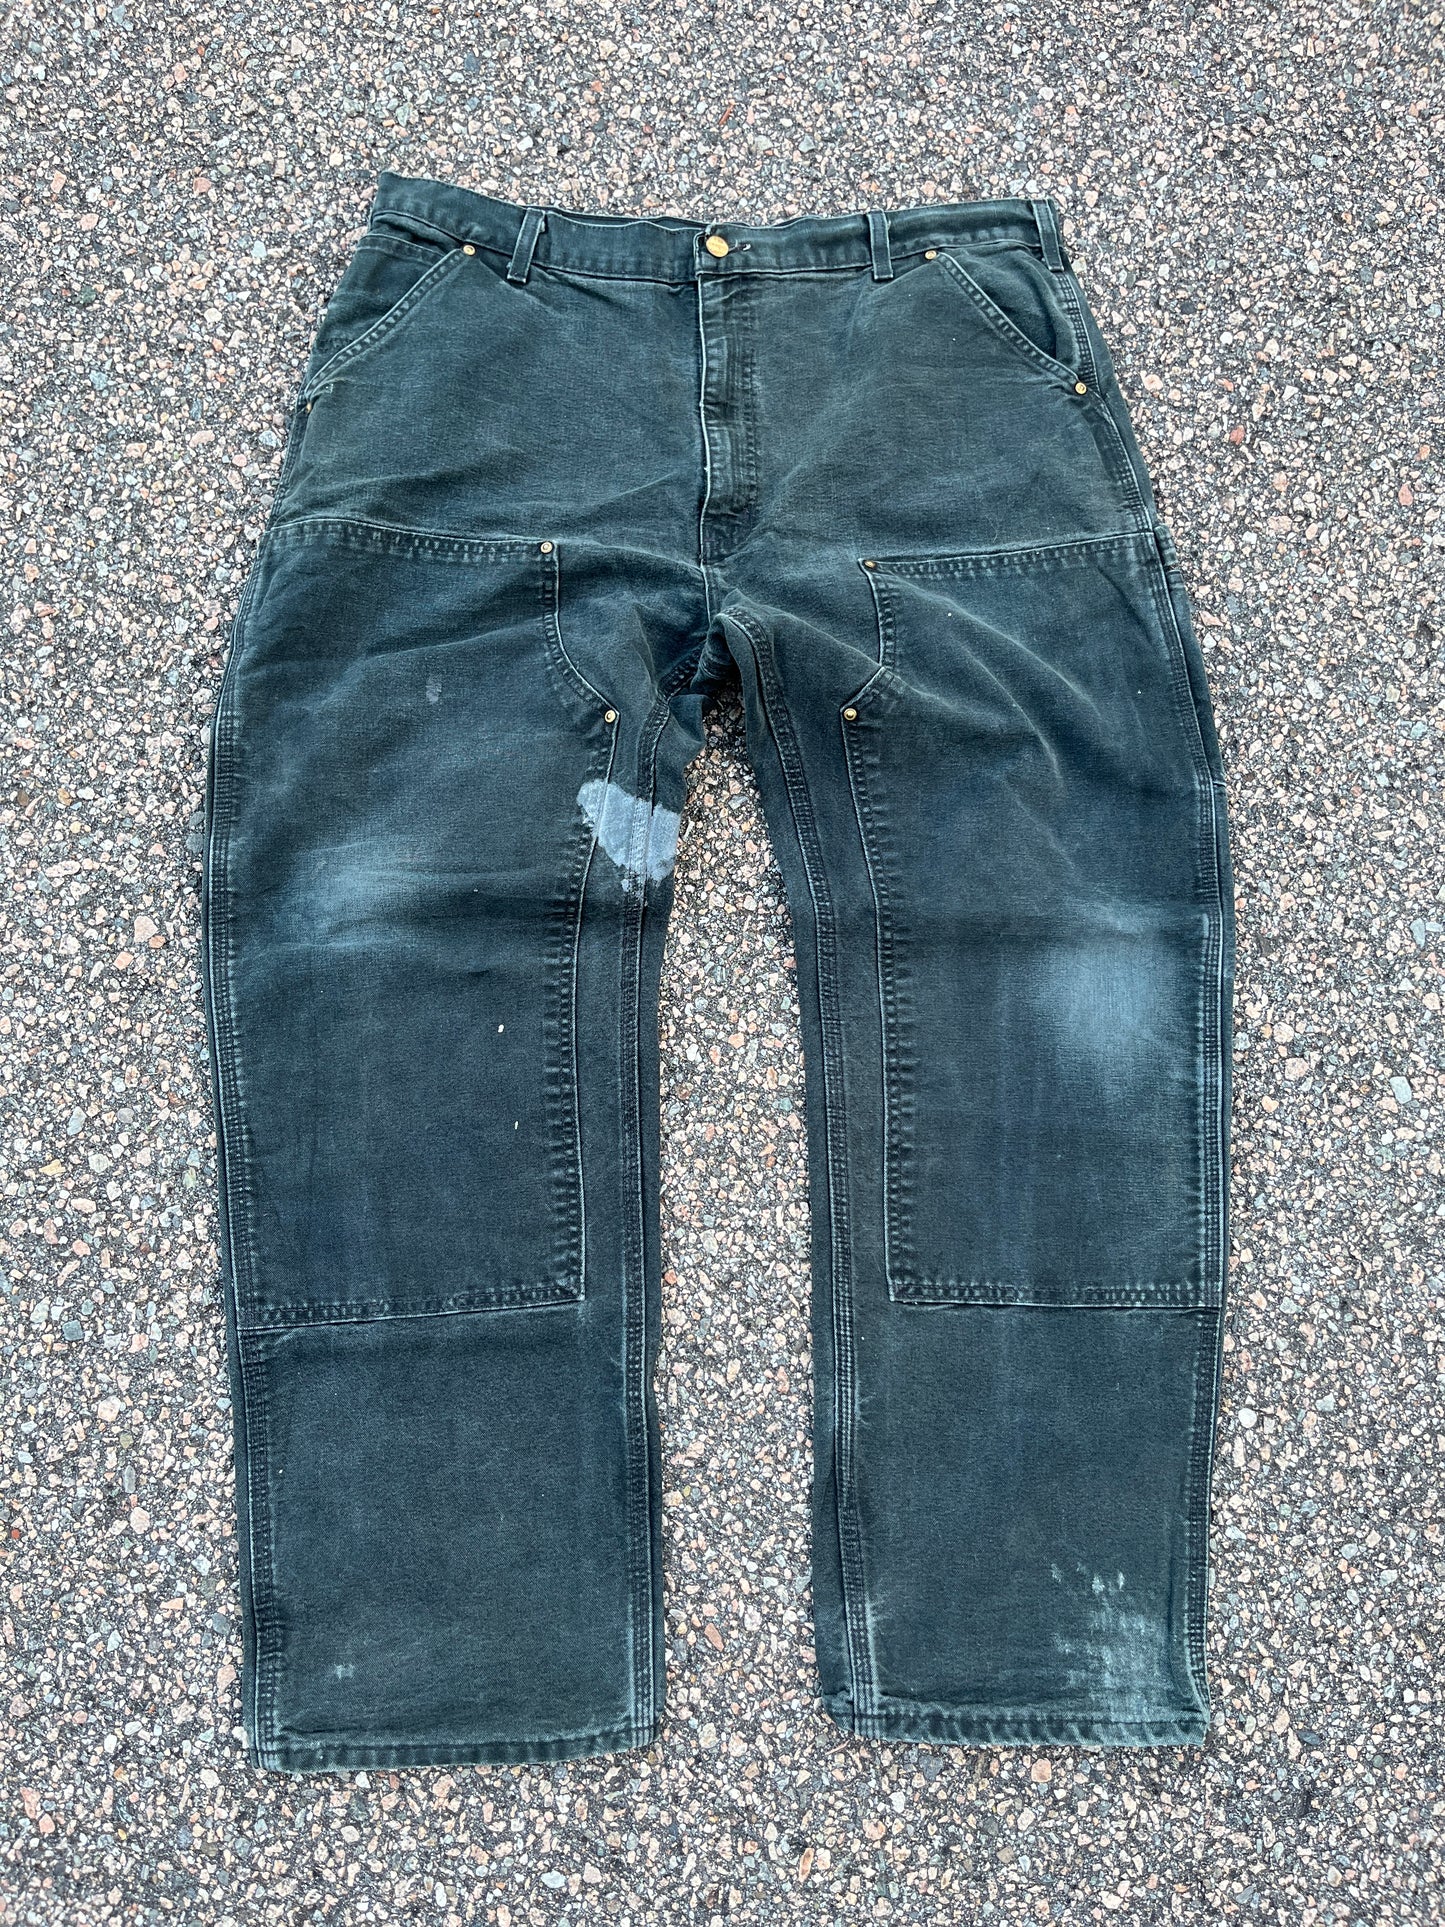 Faded Black Carhartt Double Knee Pants - 39 x 30